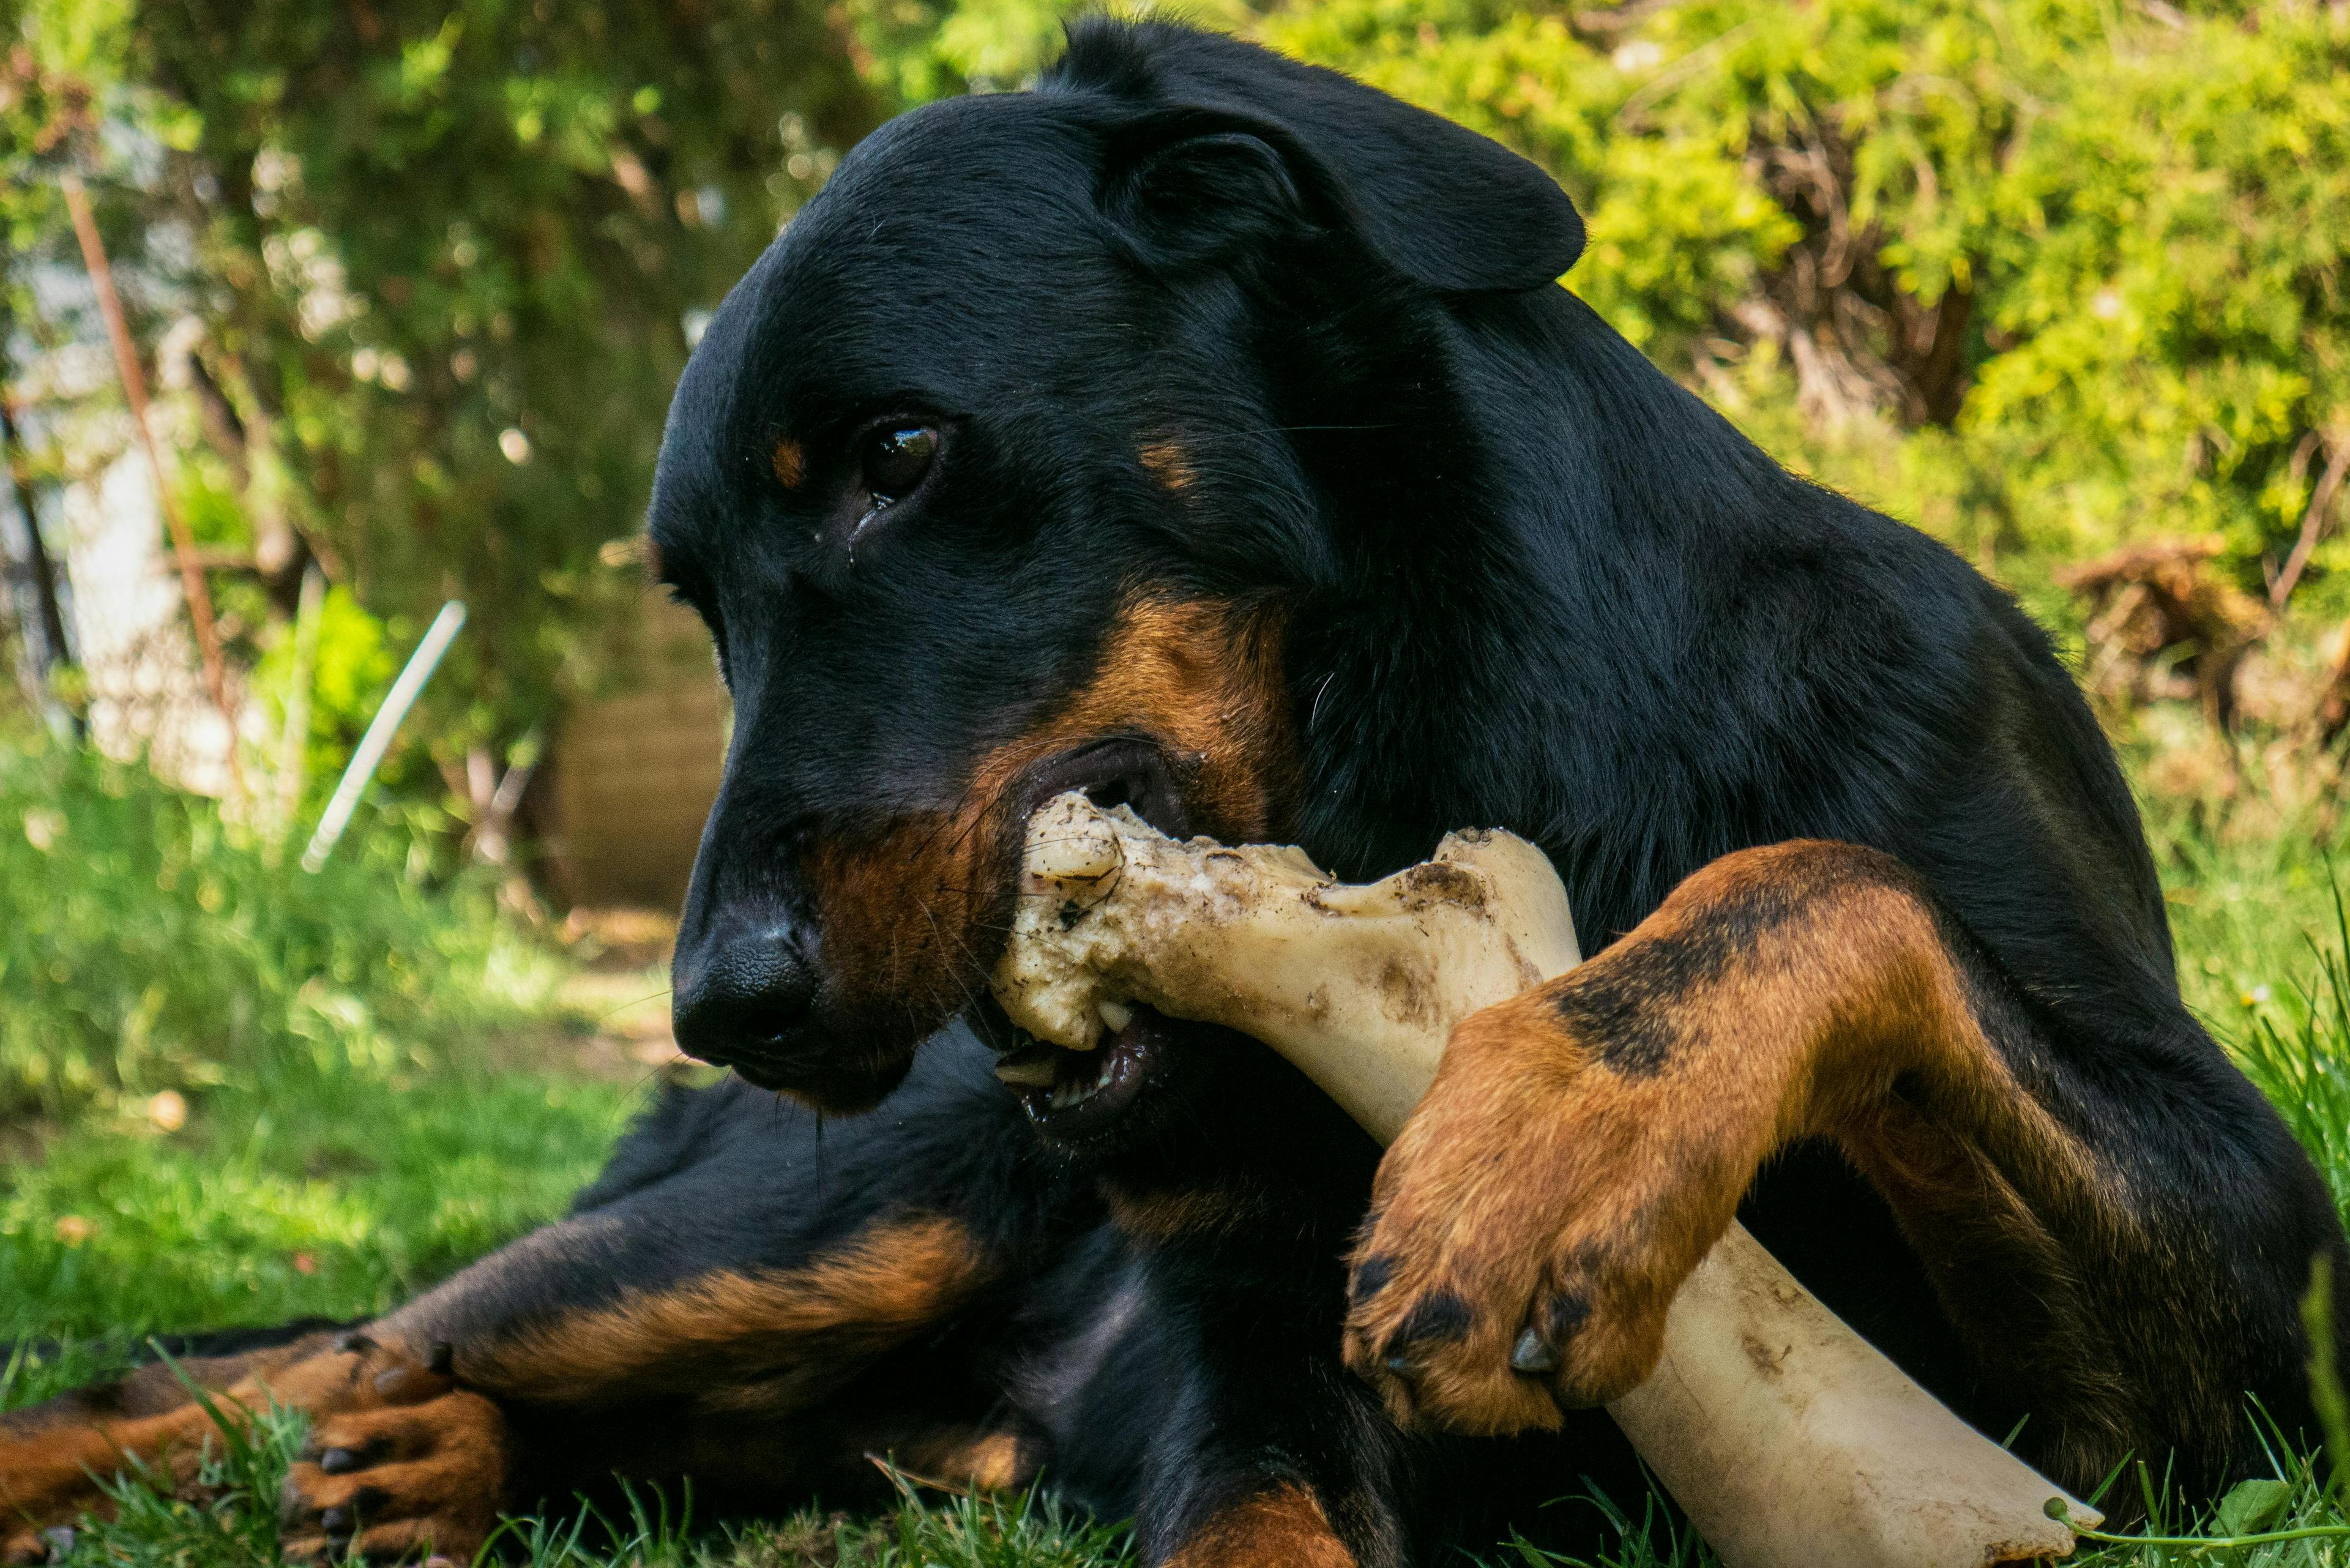 Why Do Dogs Bury Bones?